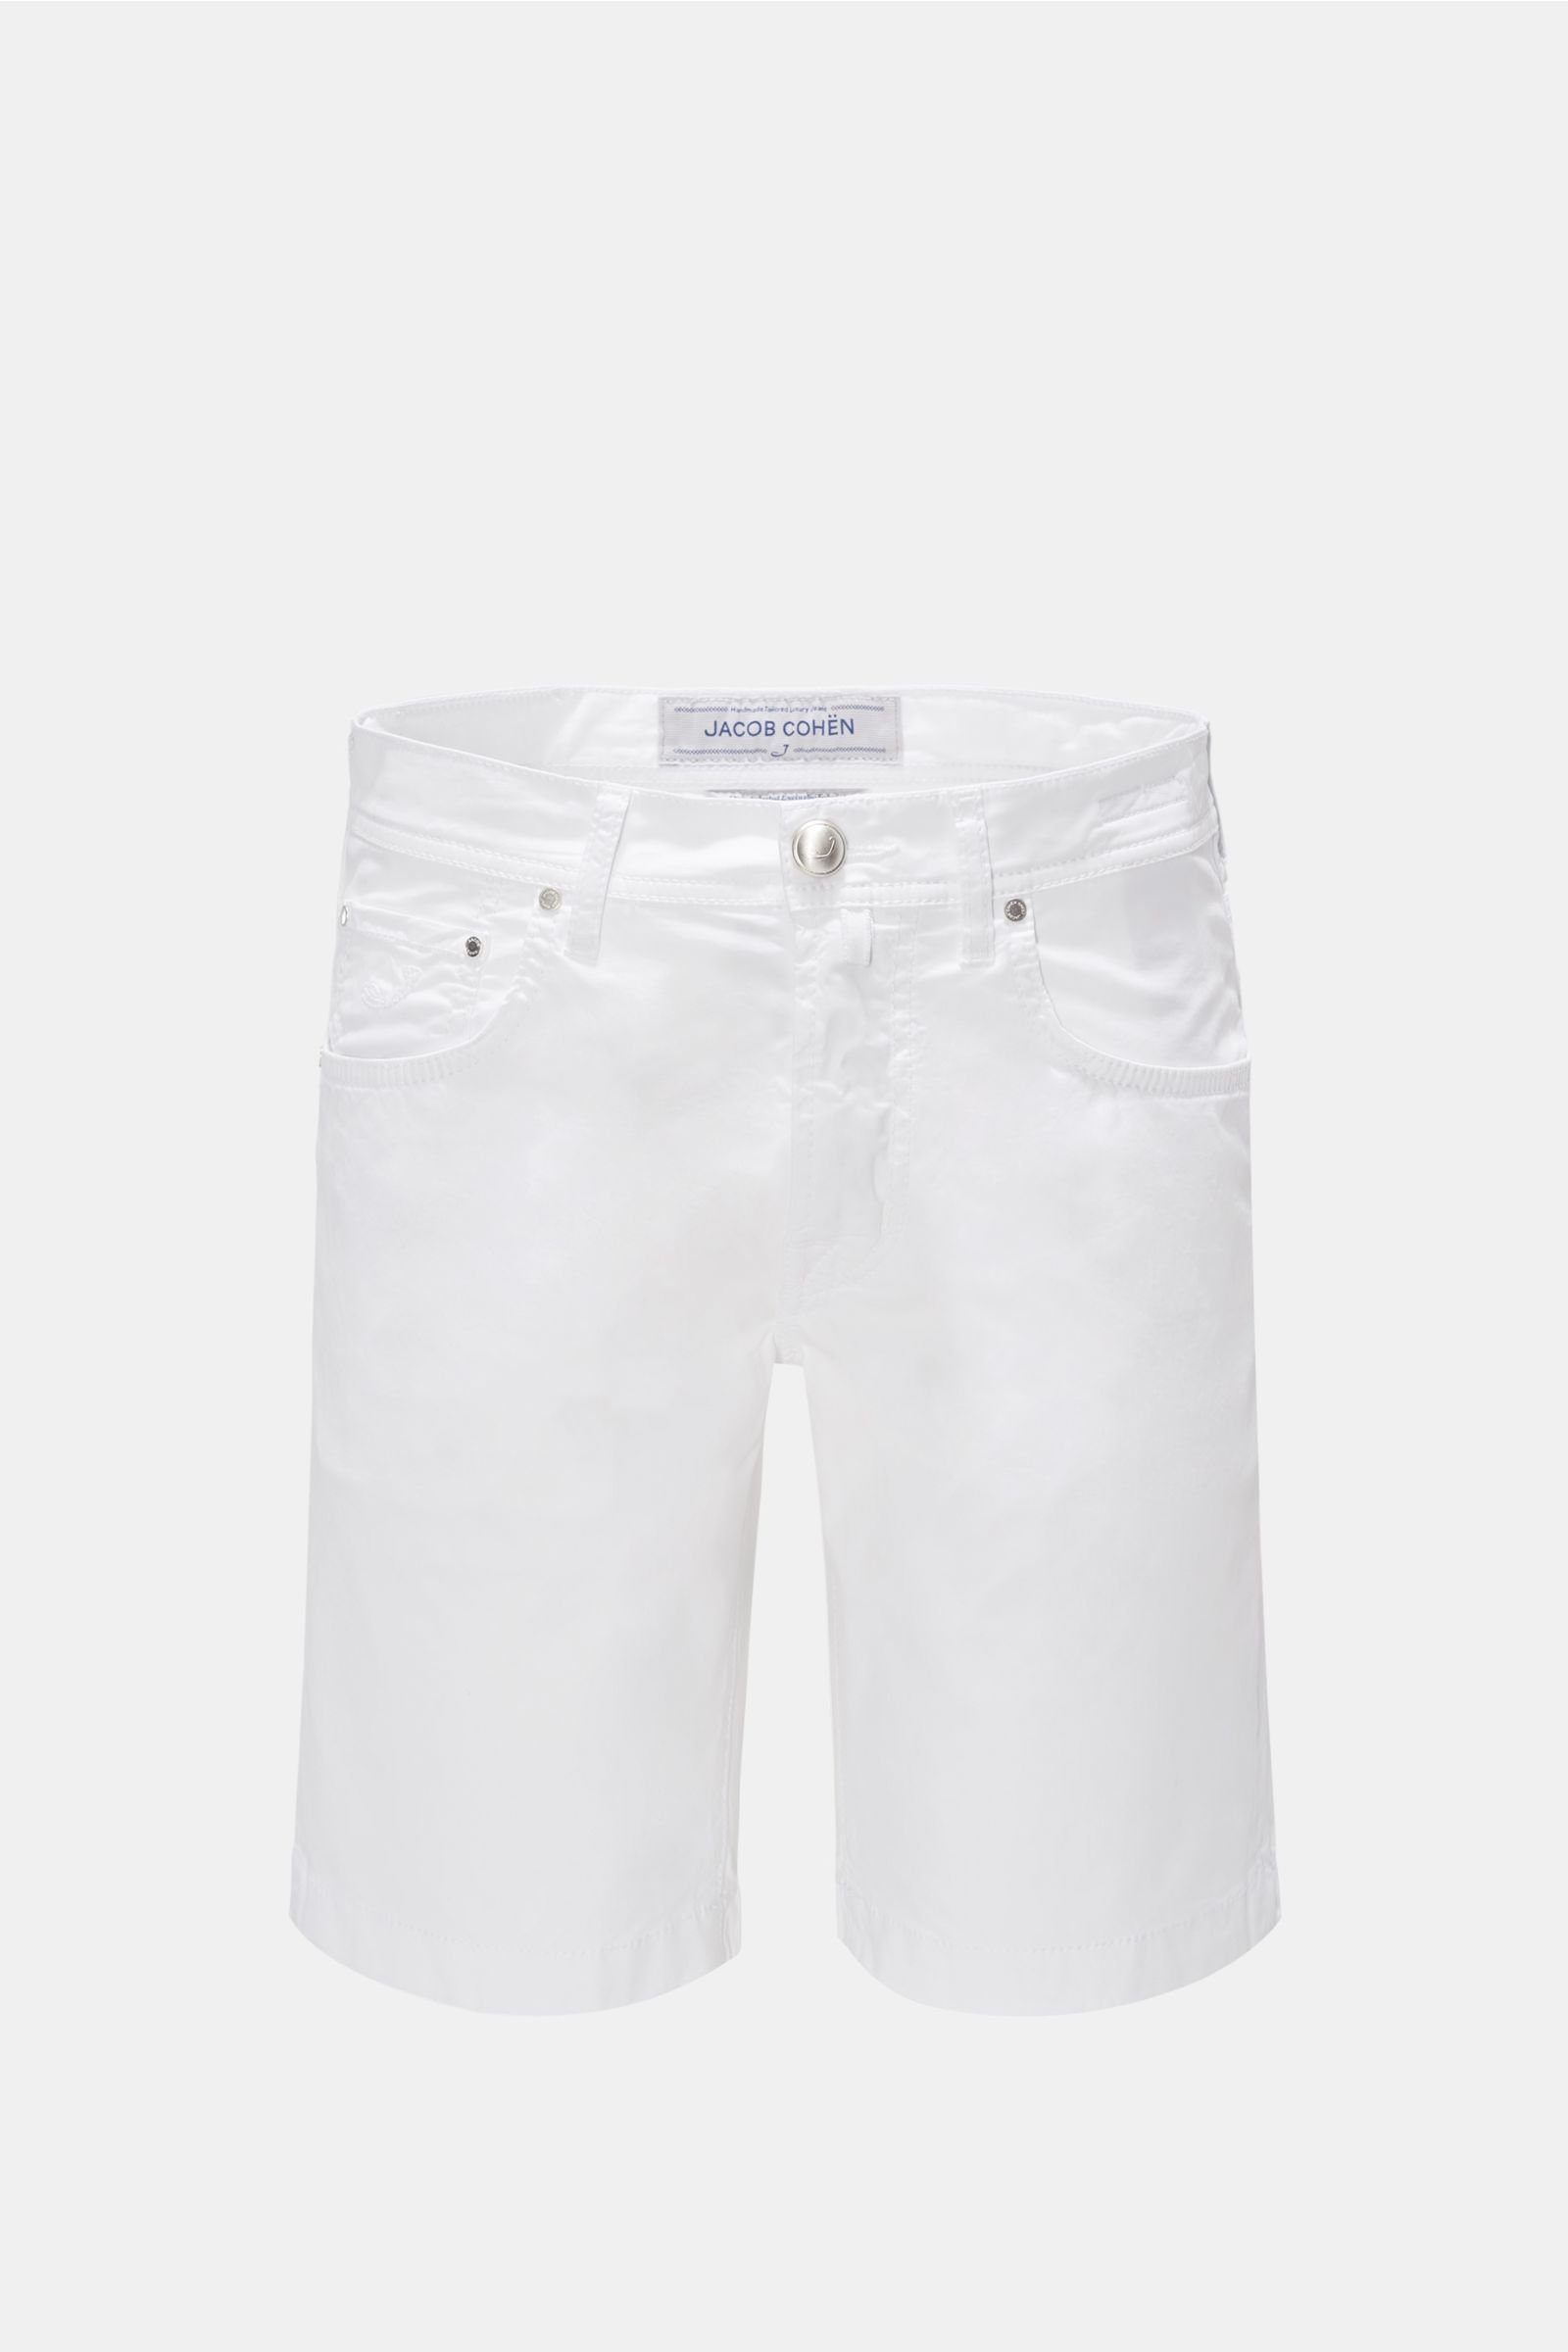 Bermuda shorts 'J6636 Comfort Slim Fit' white